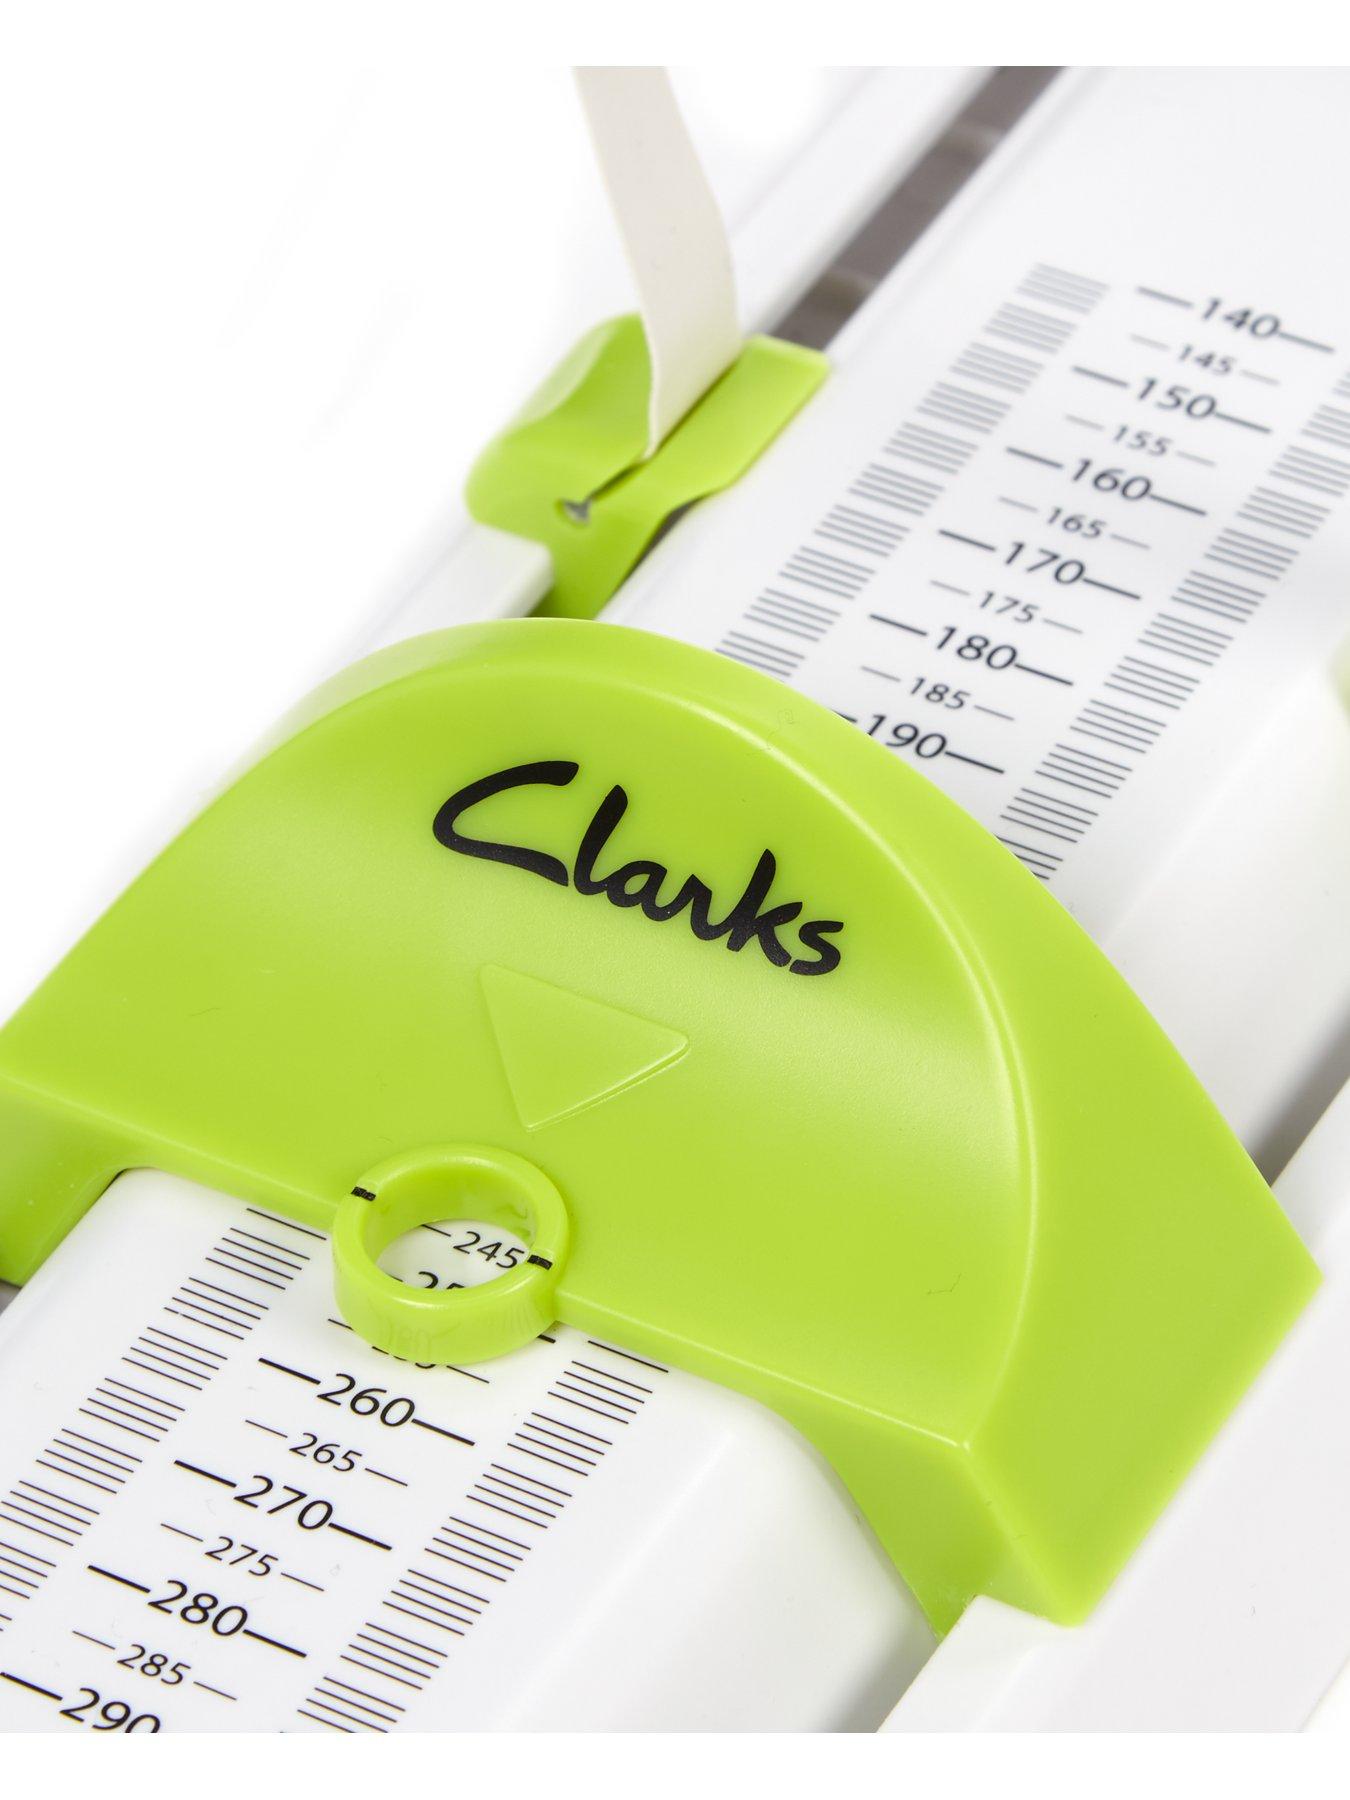 clarks measuring